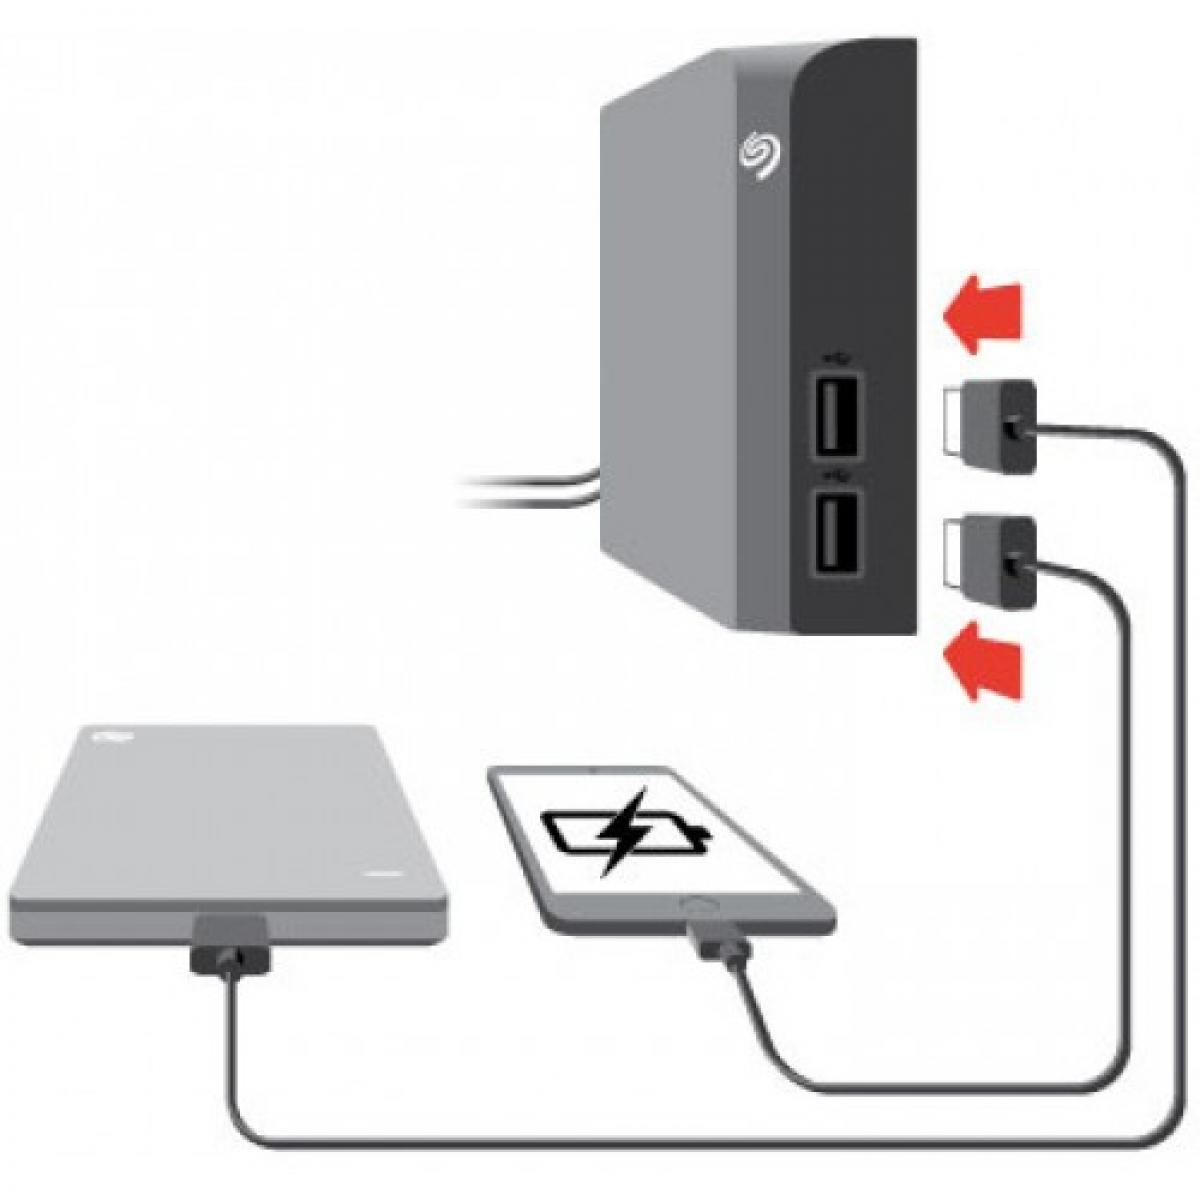 Seagate Backup Plus Hub. USB C-концентратор плус е173. Подключенное устройство one connect. Что это такое ?. Рисунок устройство с USB портом. 5.1 device